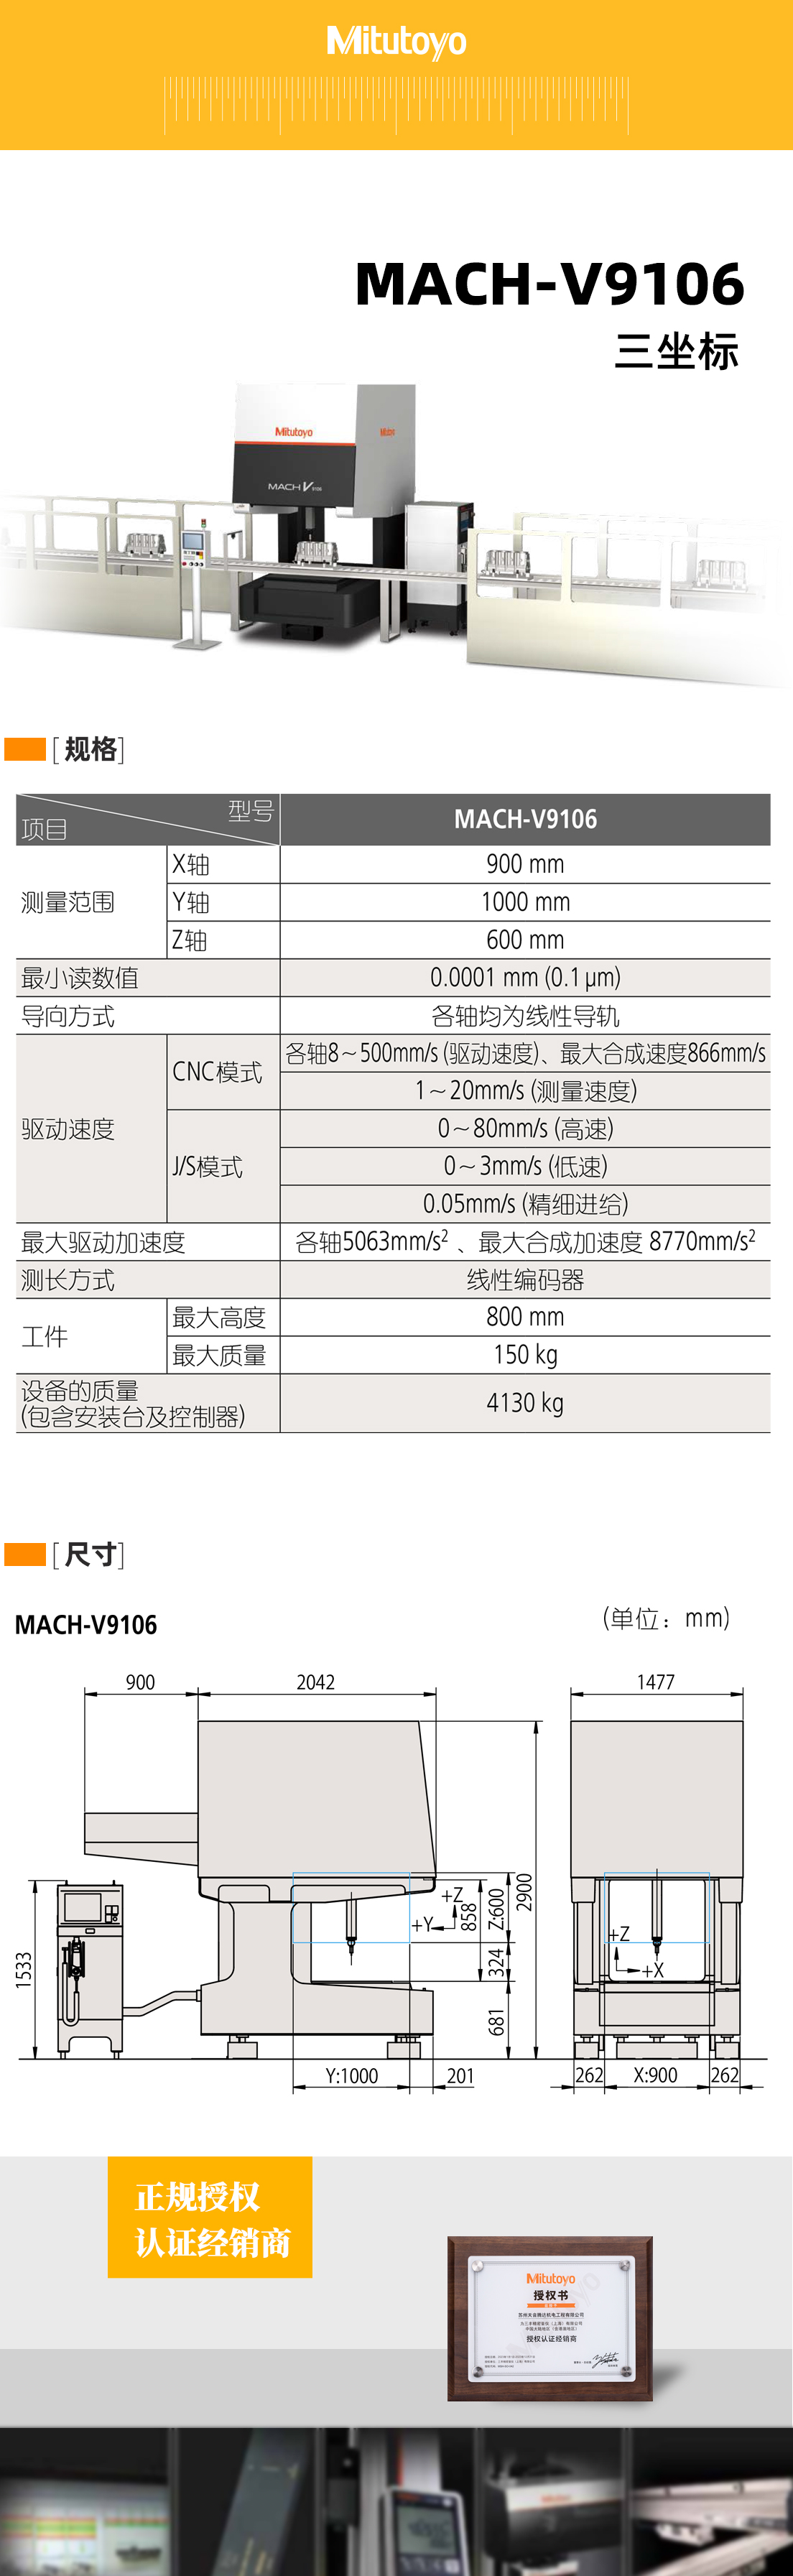 MACH-V9106